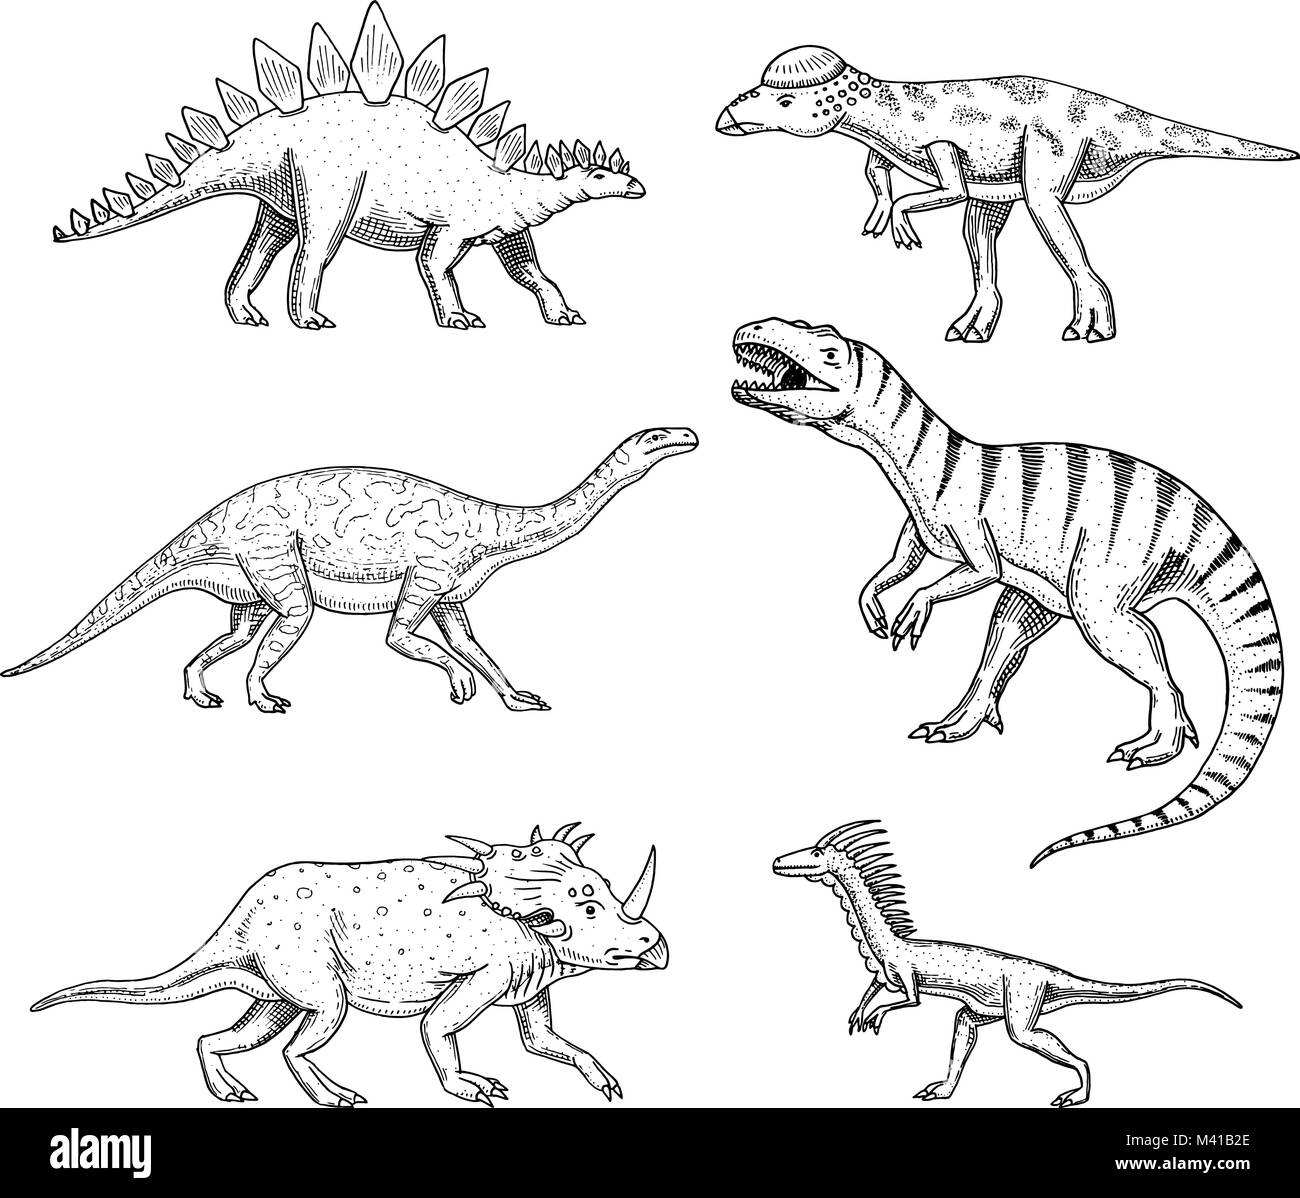 Dinosaurs set, Triceratops, Barosaurus, Tyrannosaurus rex,, Stegosaurus, Pachycephalosaurus, deinonychus, skeletons, fossils. Prehistoric reptiles, Animal Hand drawn vector. Stock Vector